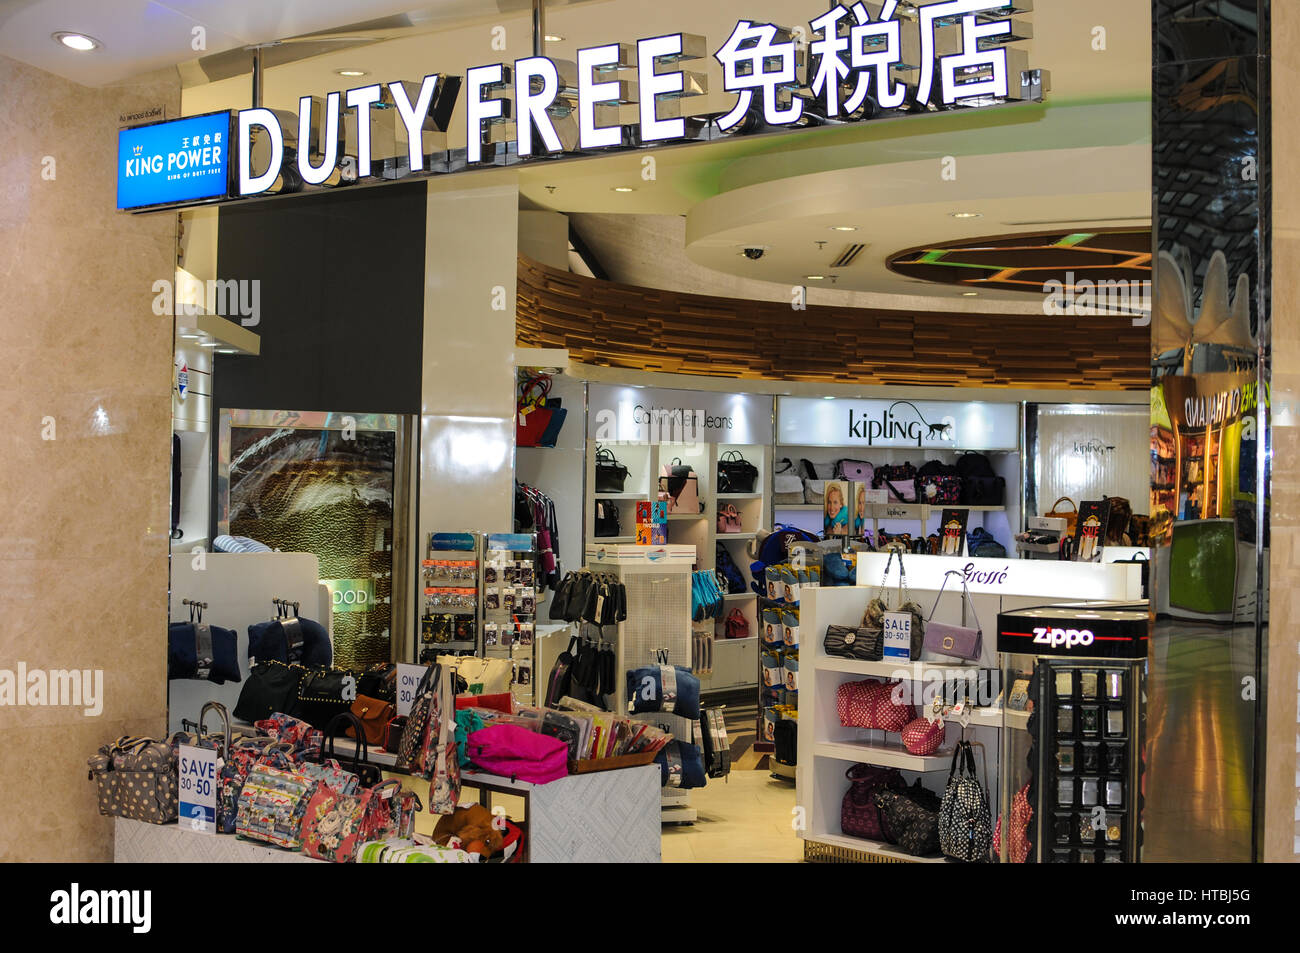 Airport Duty Free Shop Fotos e Imágenes de stock - Alamy